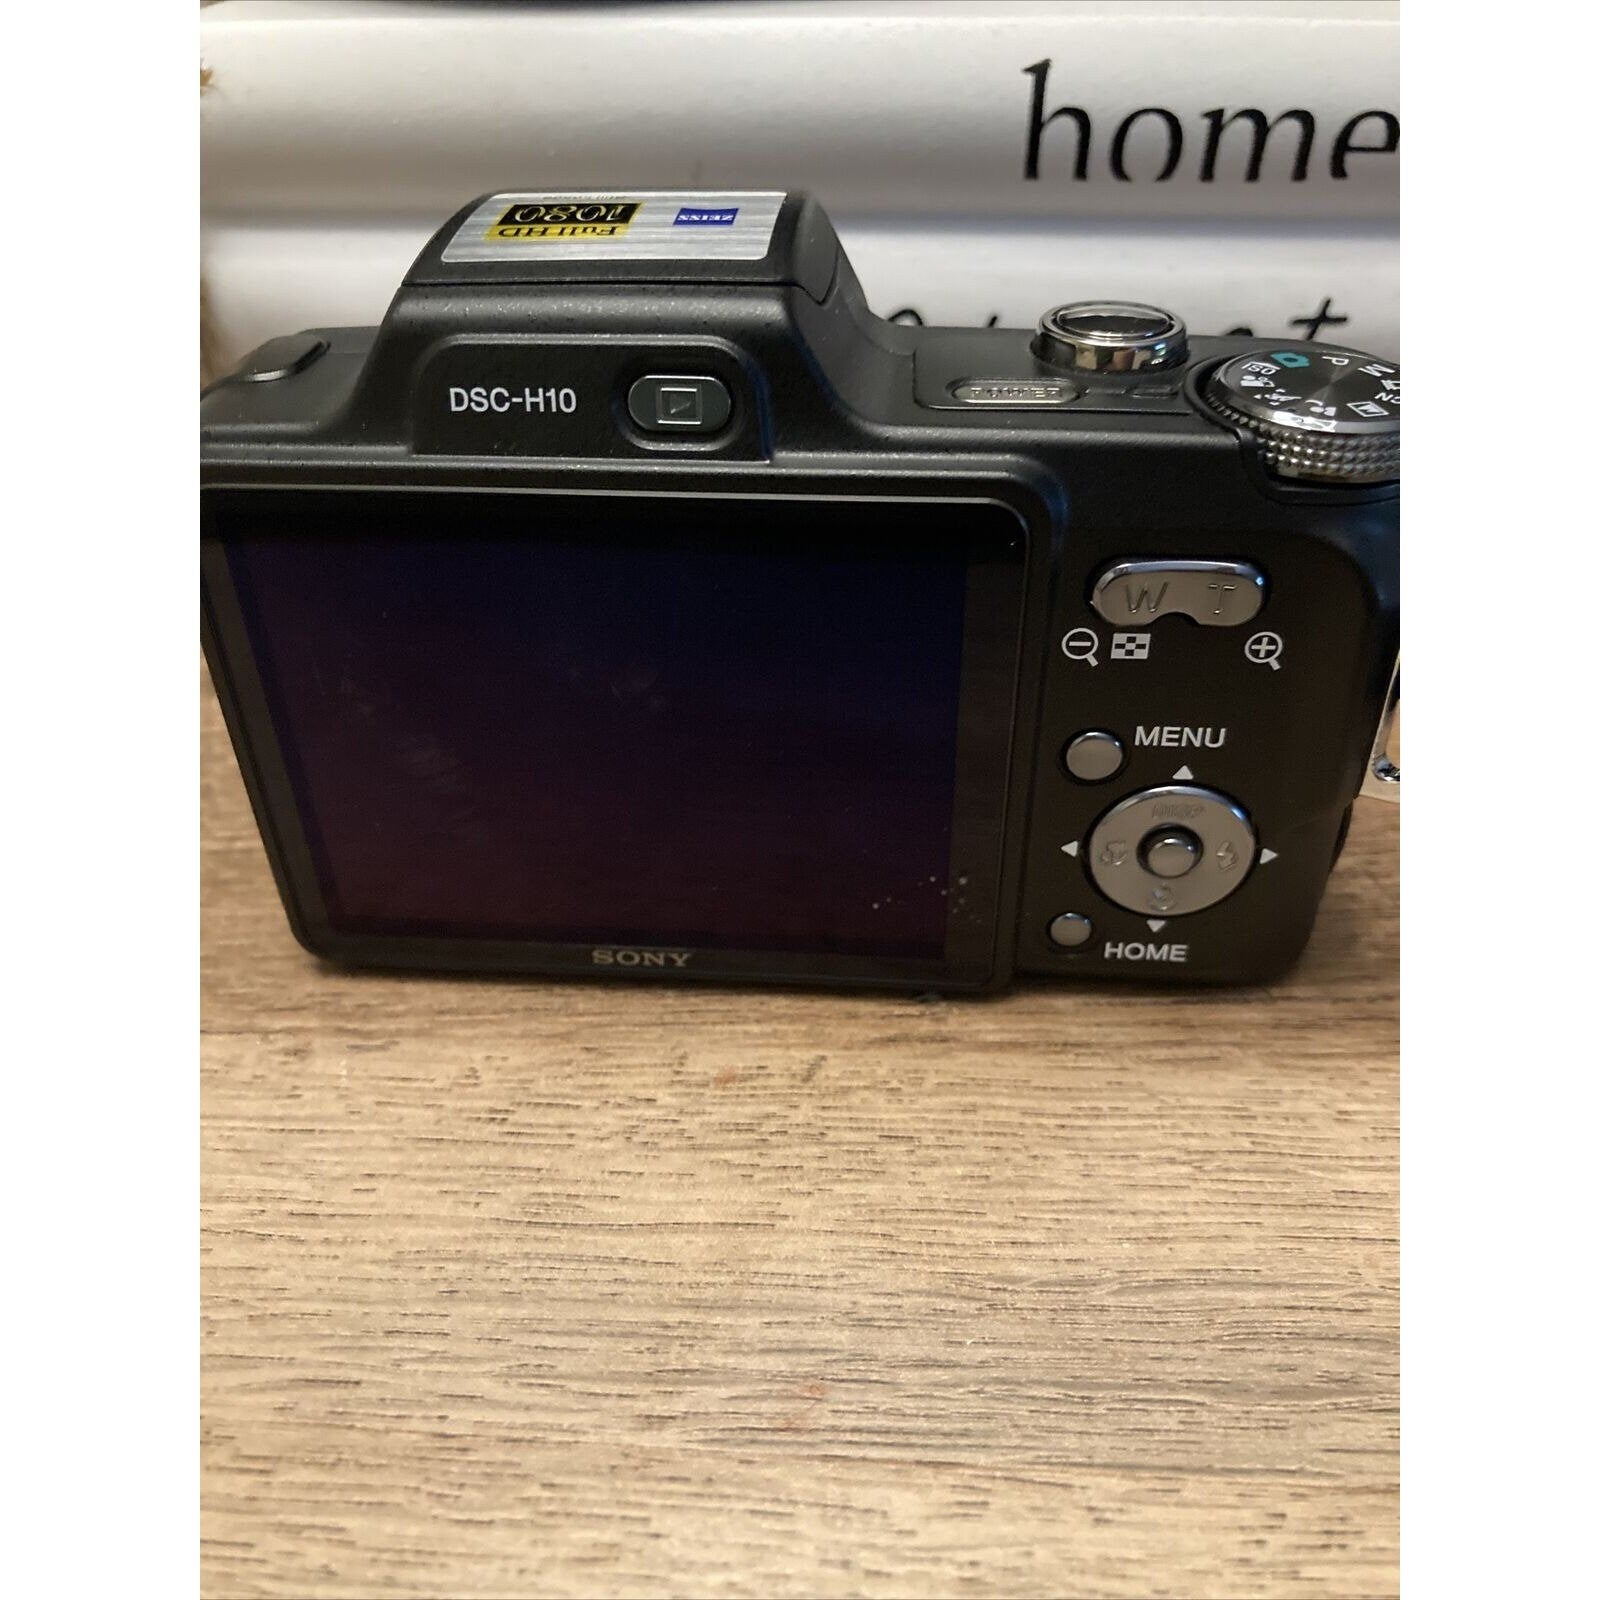 Sony Cyber-shot DSC-H10 8.1 MP Digital Camera - Black